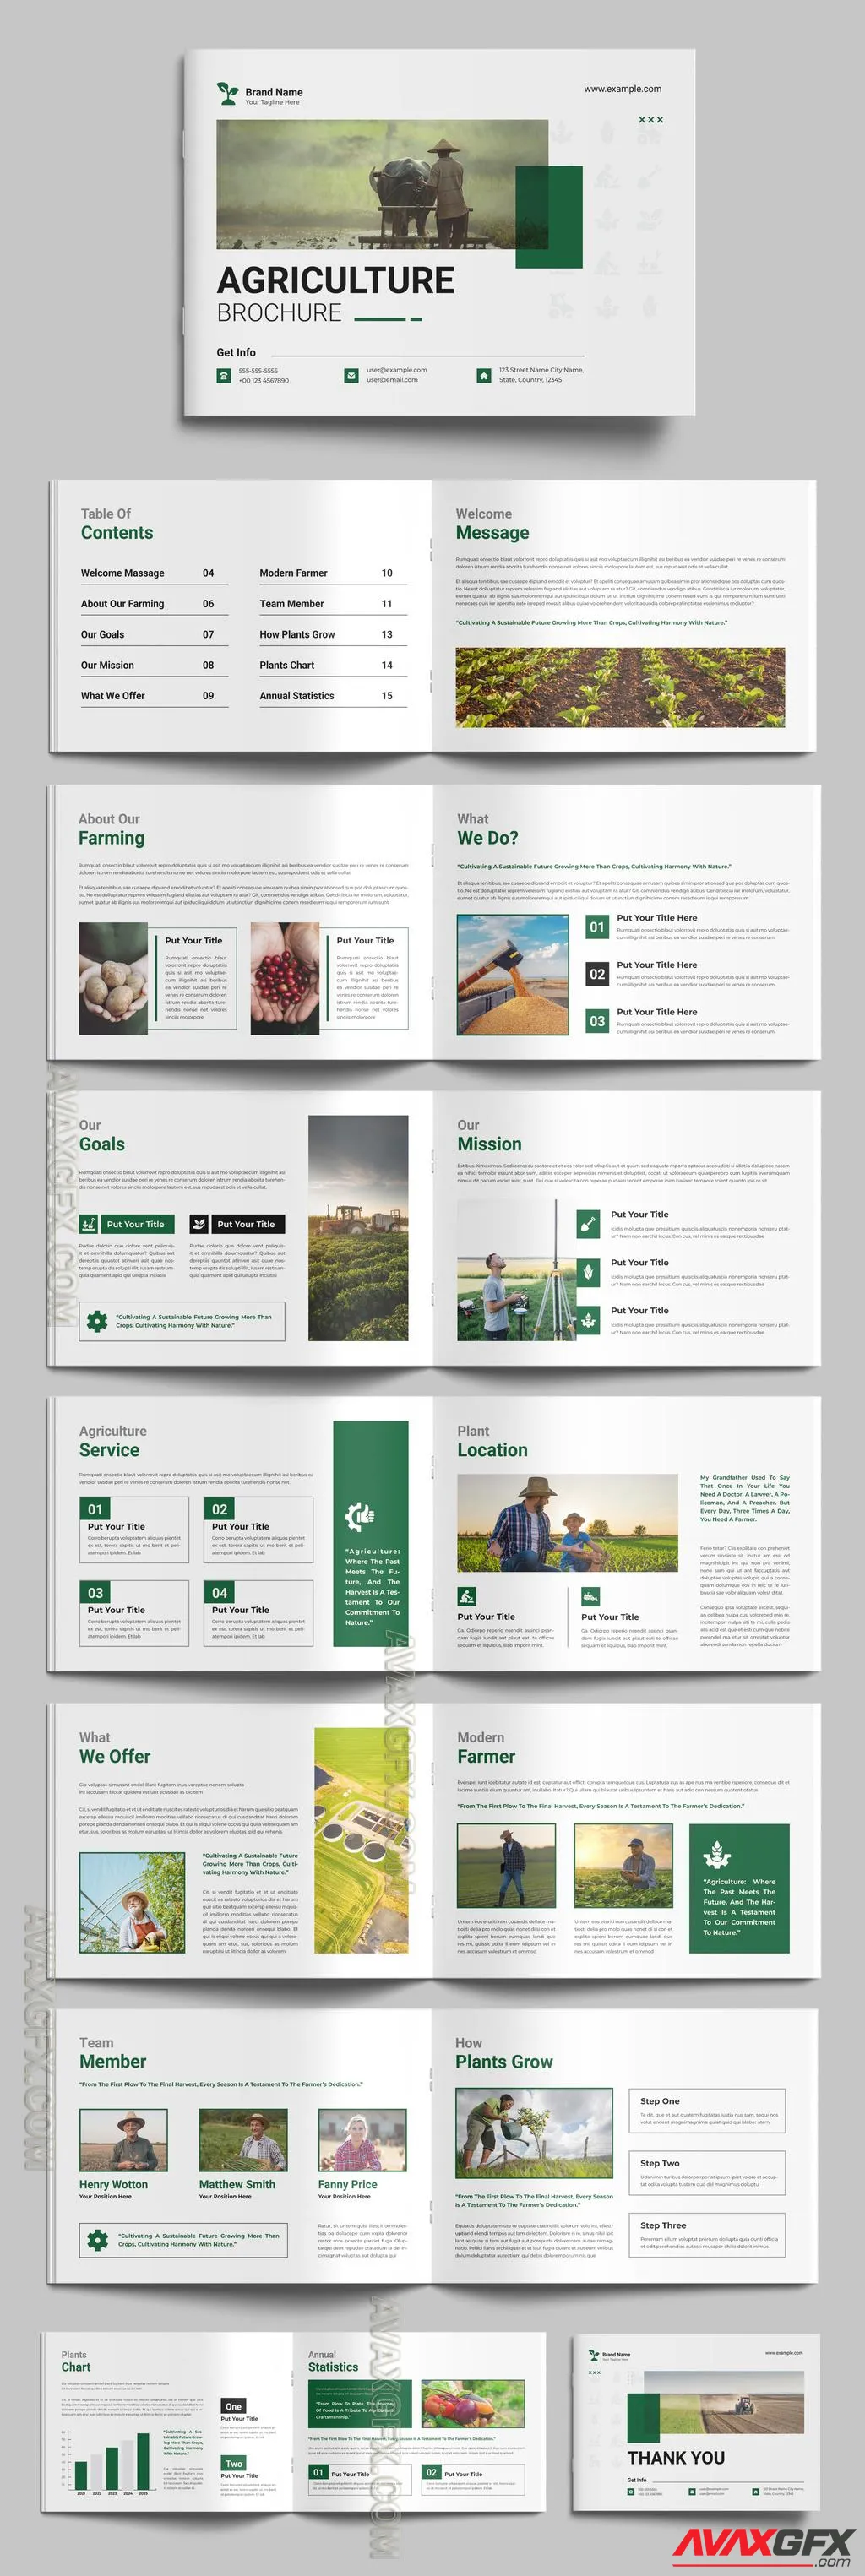 Adobestock - Agriculture Brochure Template Design Landscape 757152409